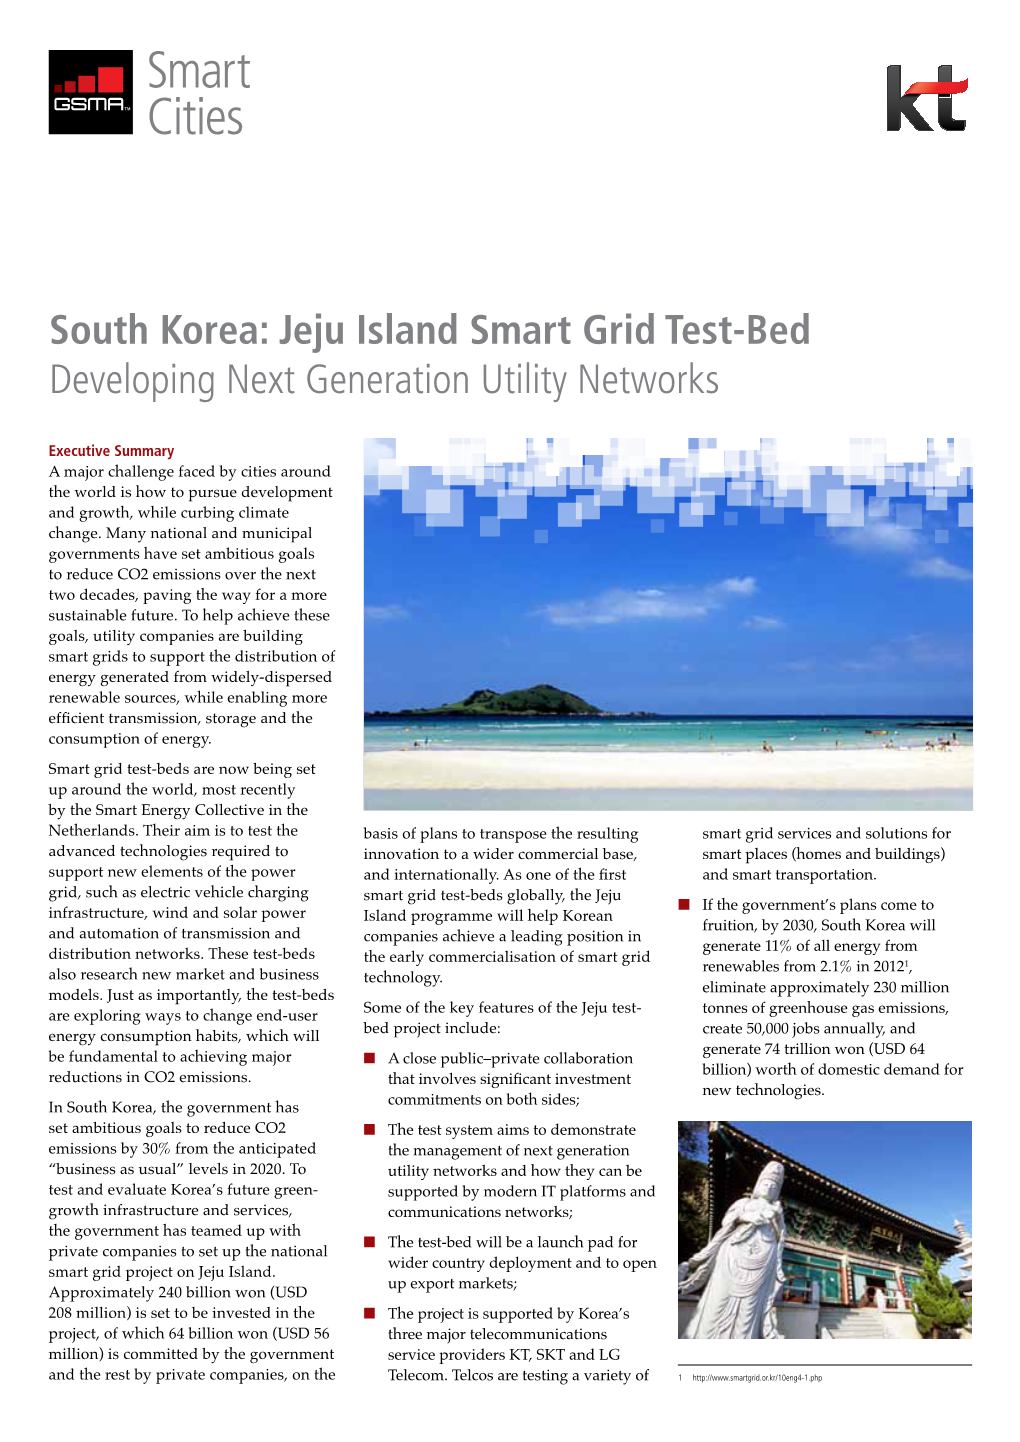 South Korea: Jeju Island Smart Grid Test-Bed Developing Next Generation Utility Networks